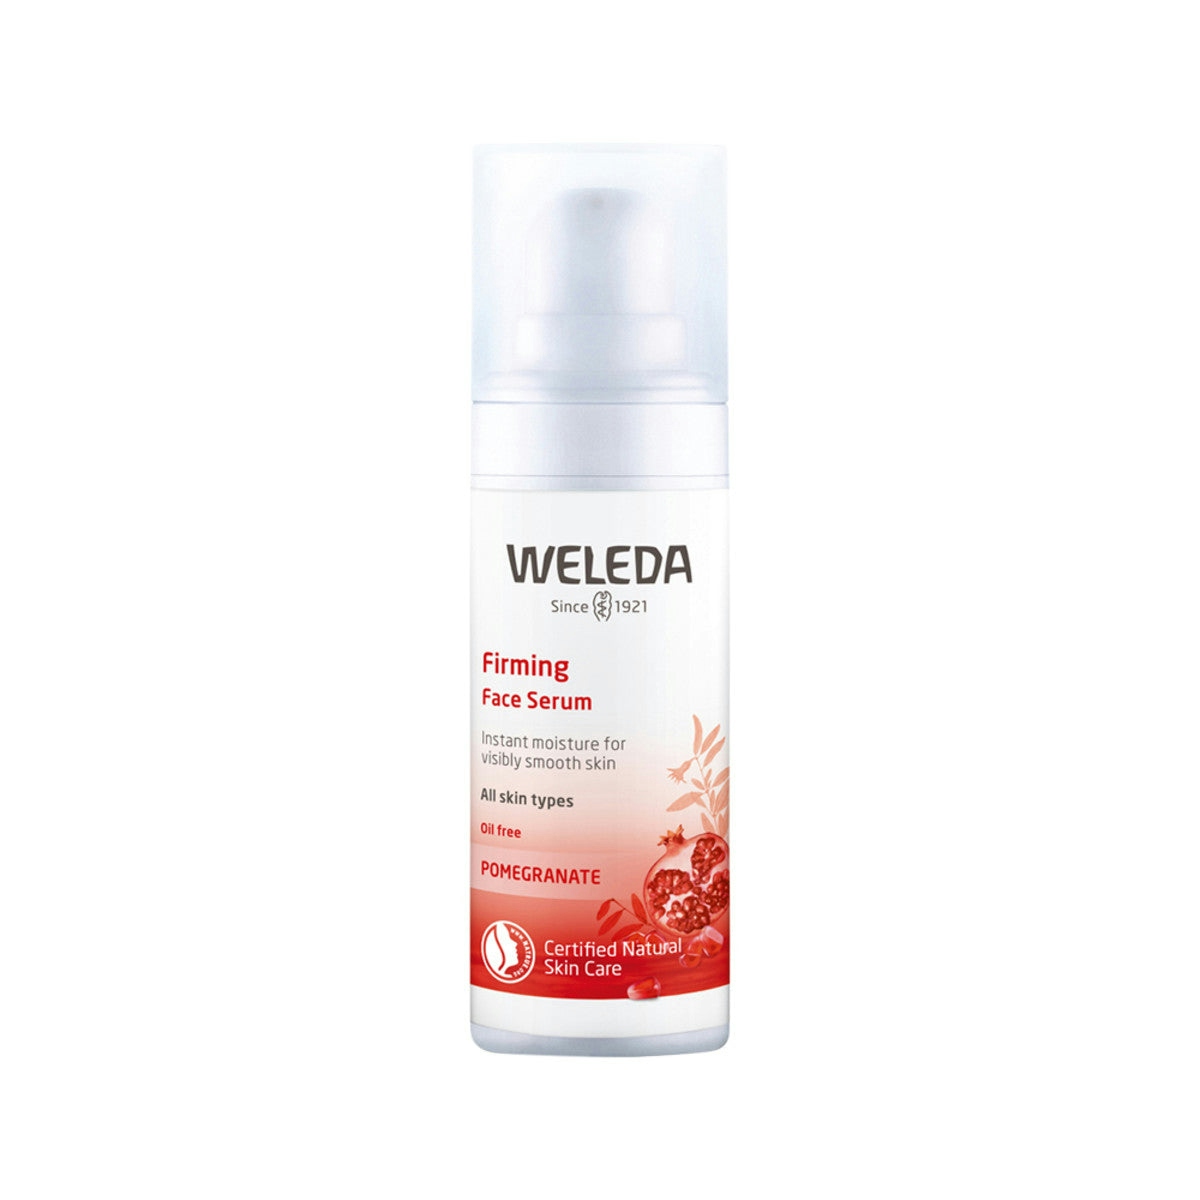 image of Weleda Firming Face Serum Pomegranate 30ml on white background 